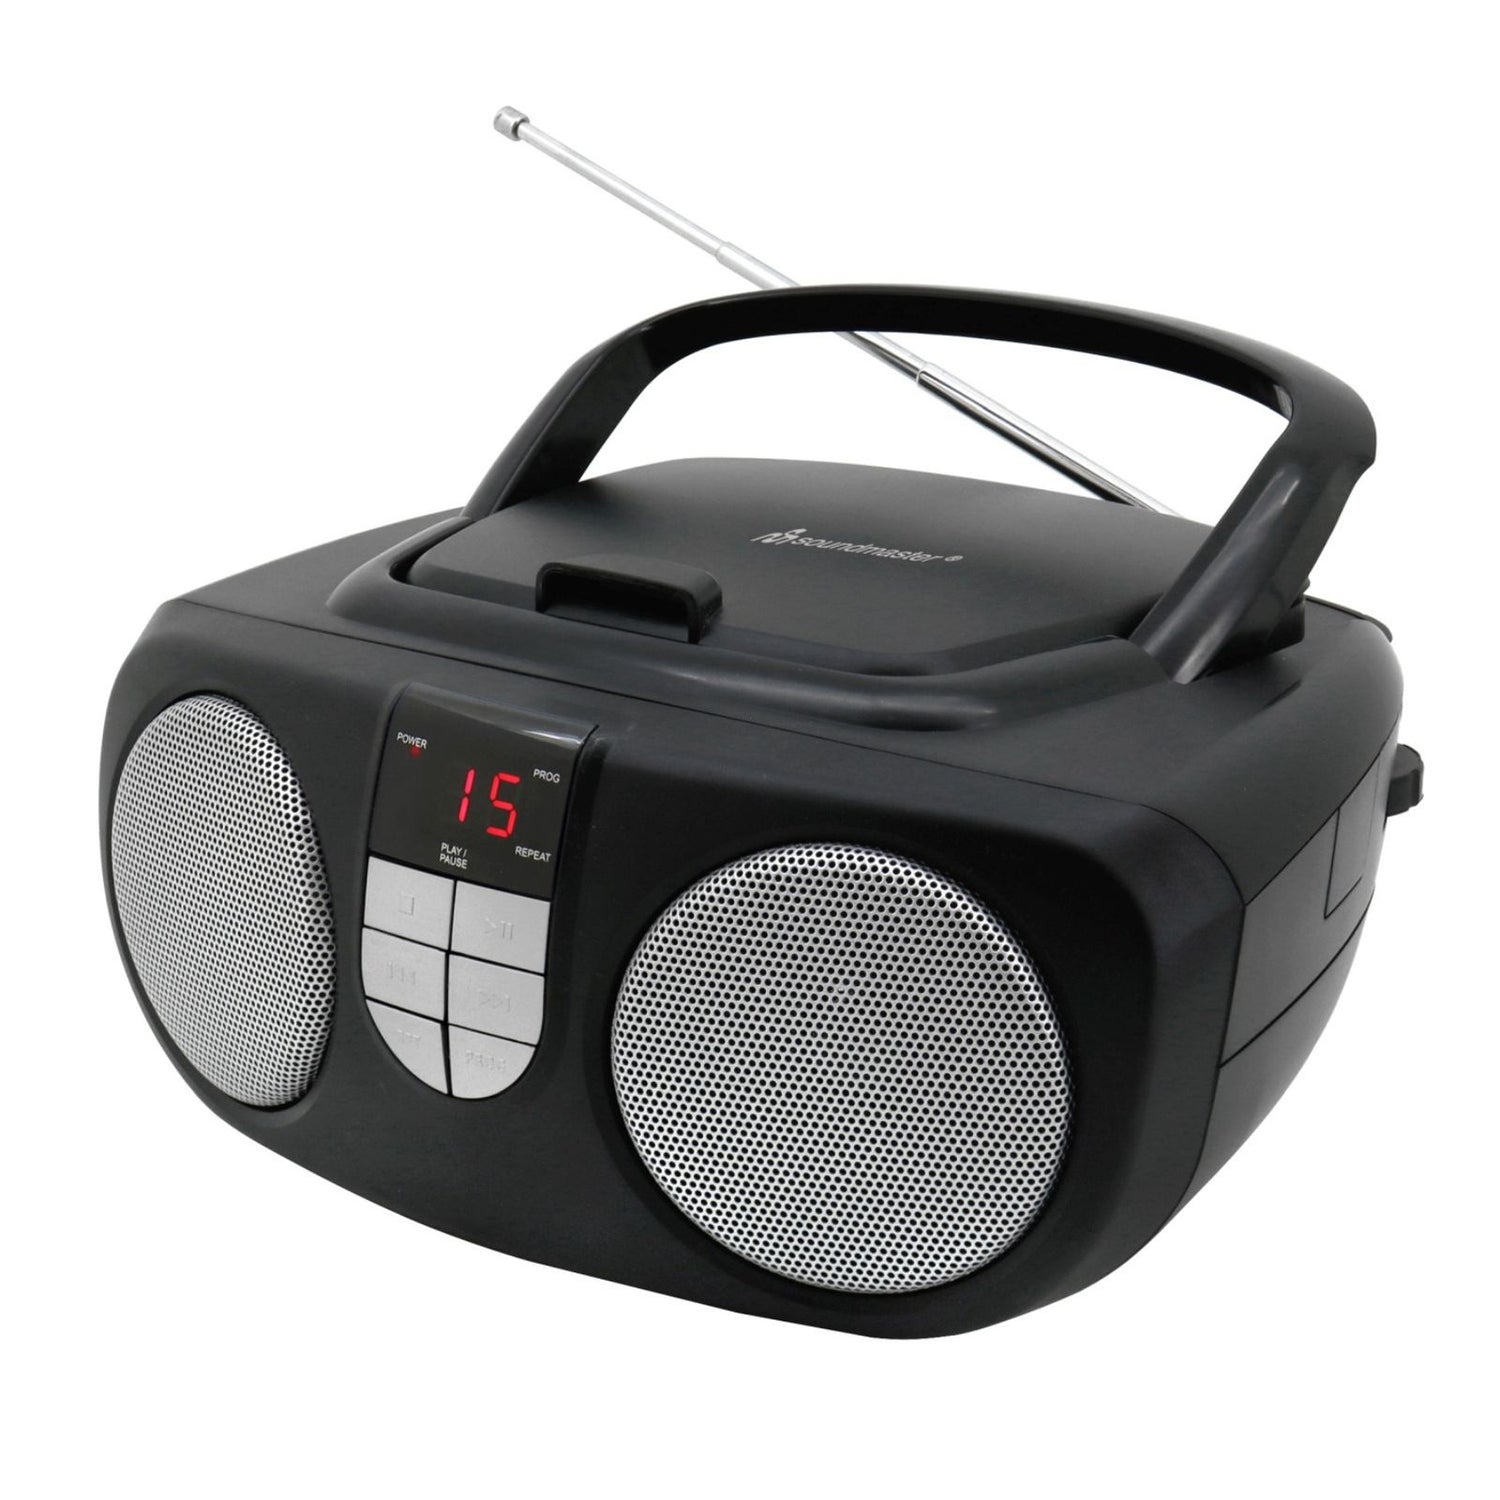 Soundmaster SCD1400 radio portable CD player radio AUX-IN children's radio boombox